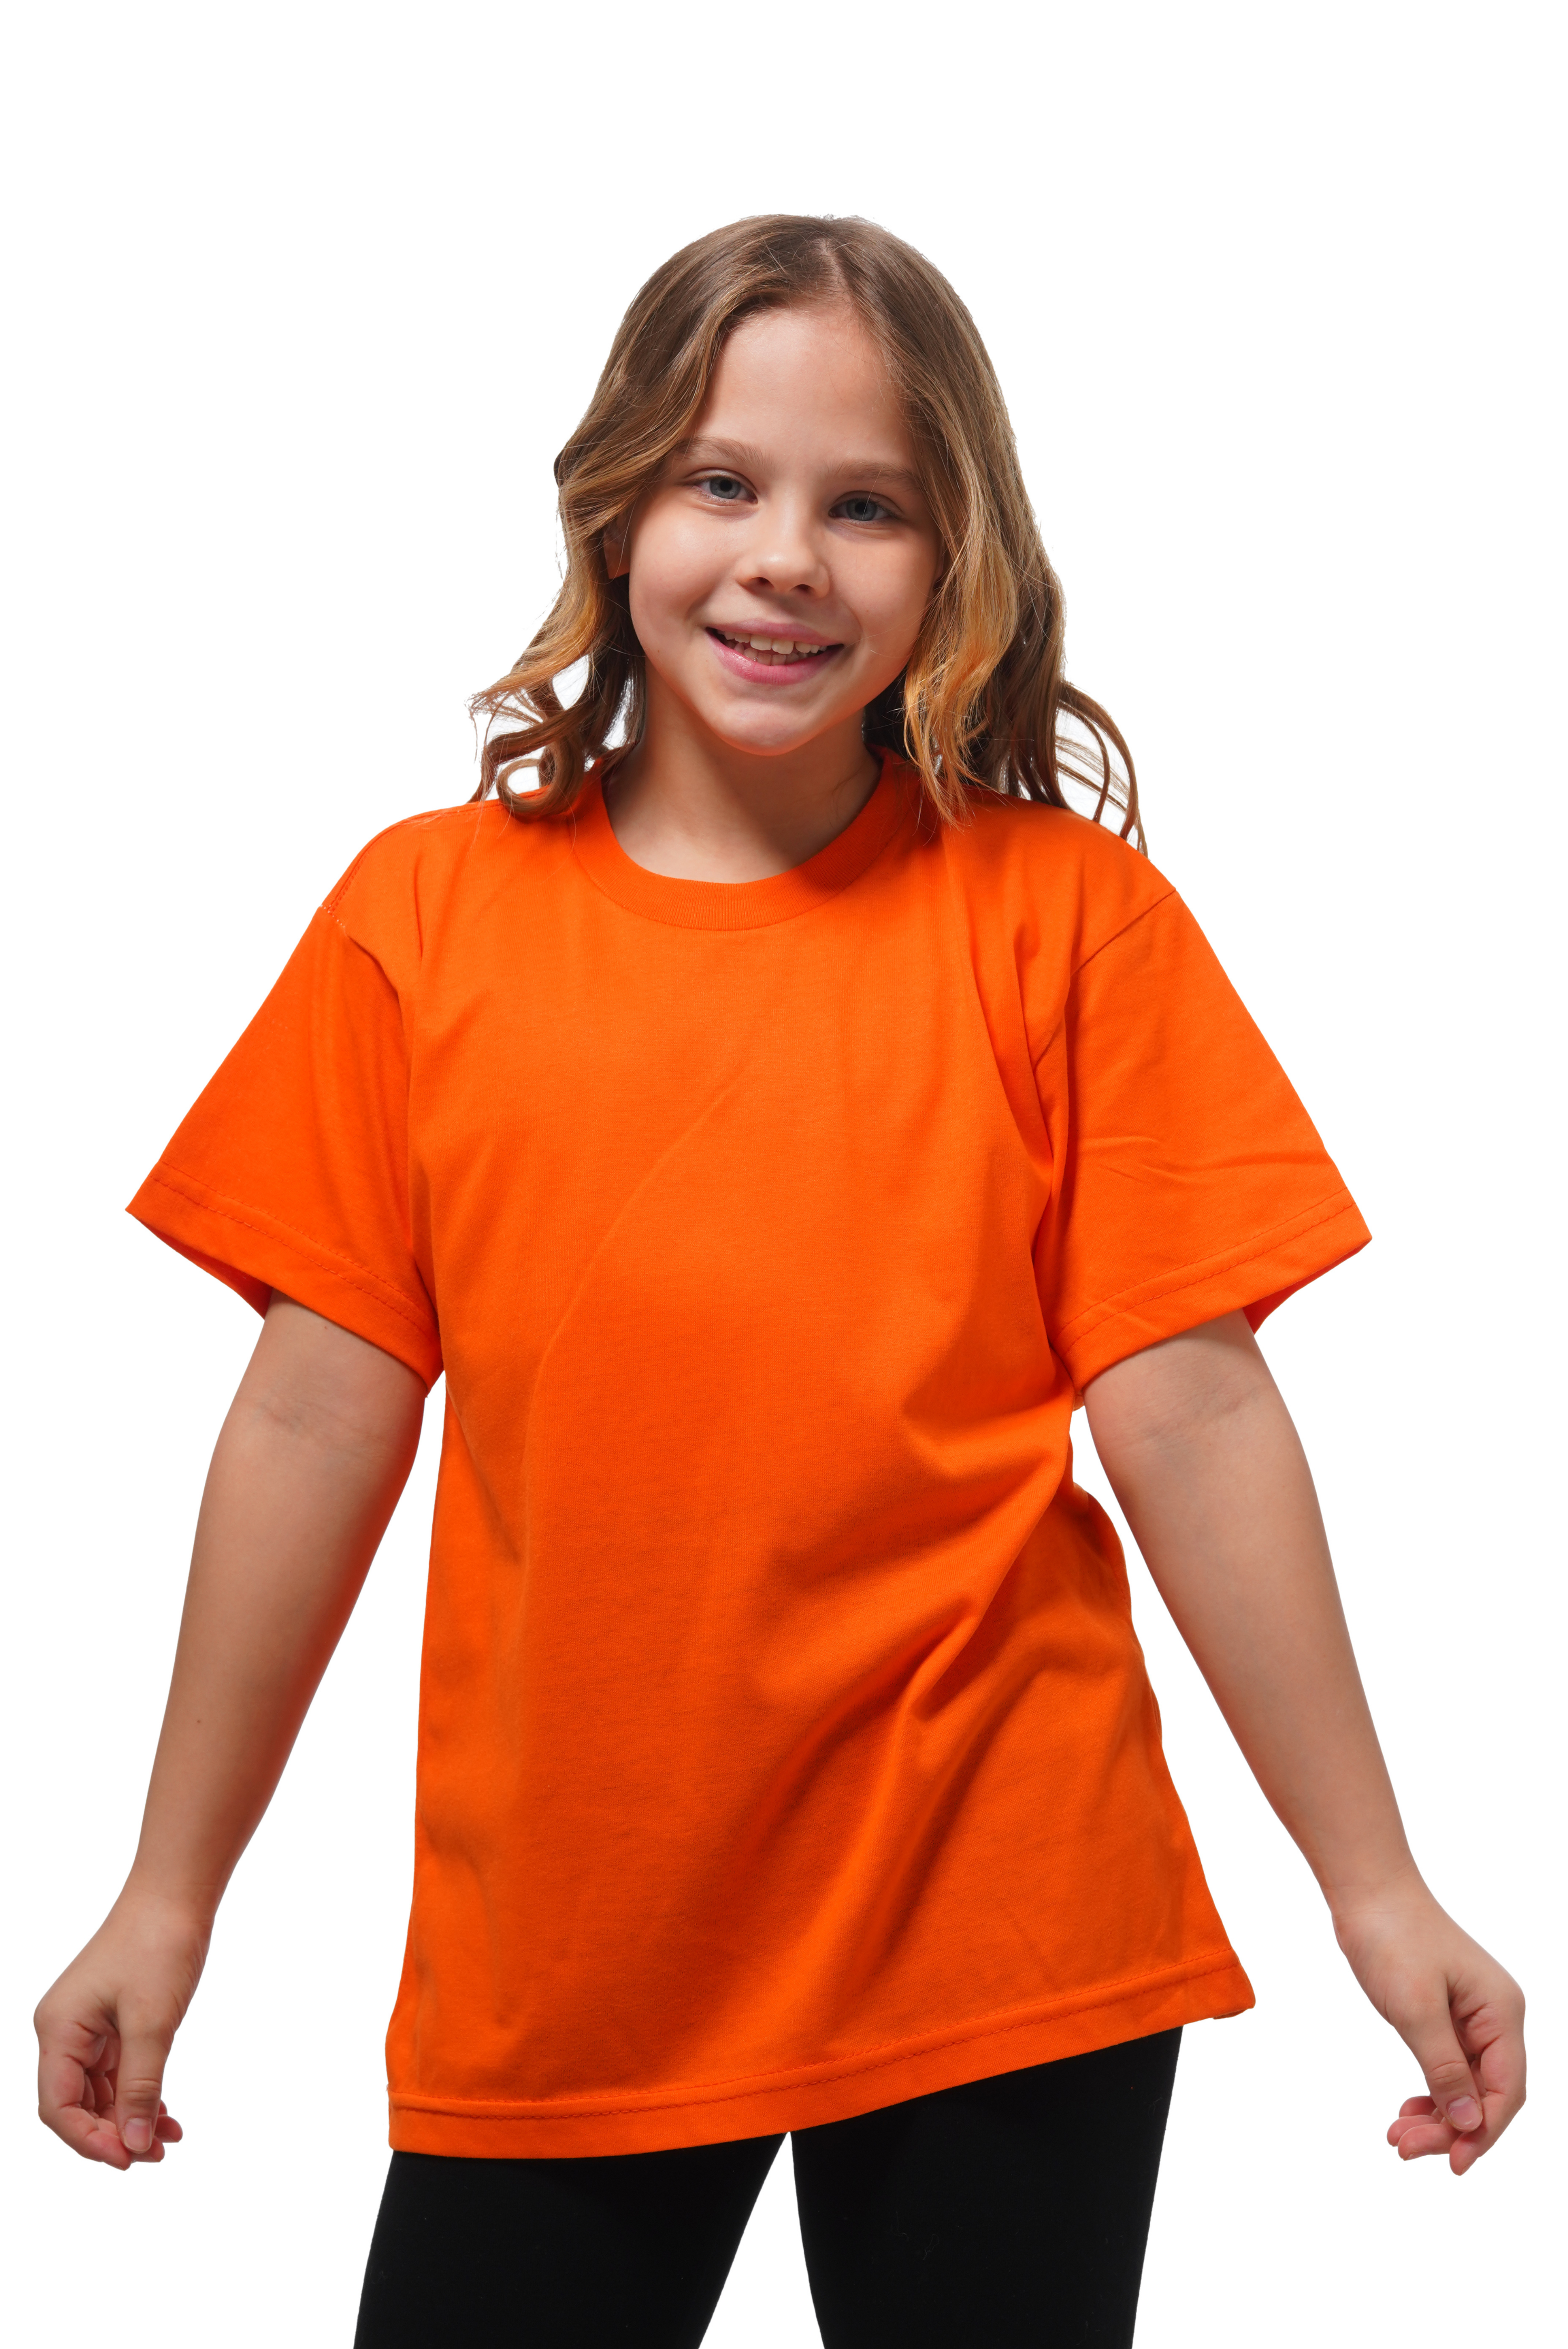 Orange And Black Kids Cotton Half Sleeves T Shirt Shorts Set, Age